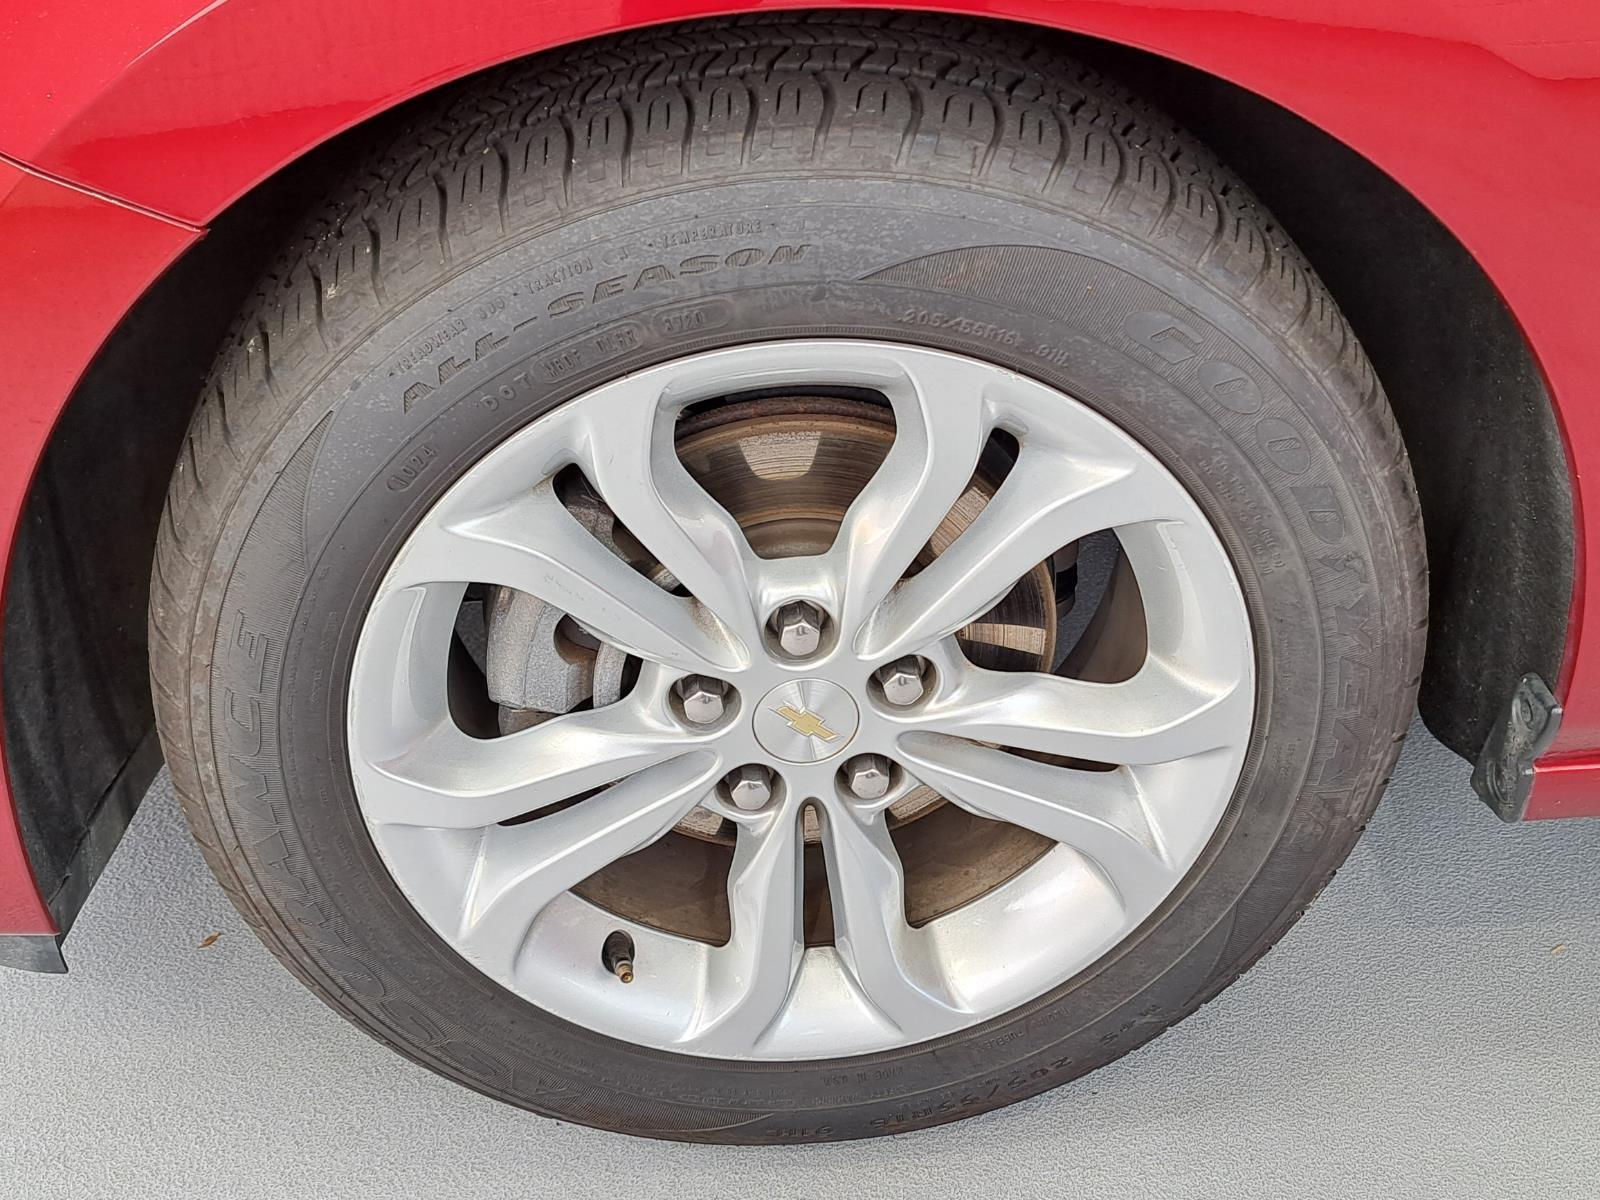 2019 Chevrolet Cruze LT Hatchback 4 Dr. Front Wheel Drive mobile thumbnail 34